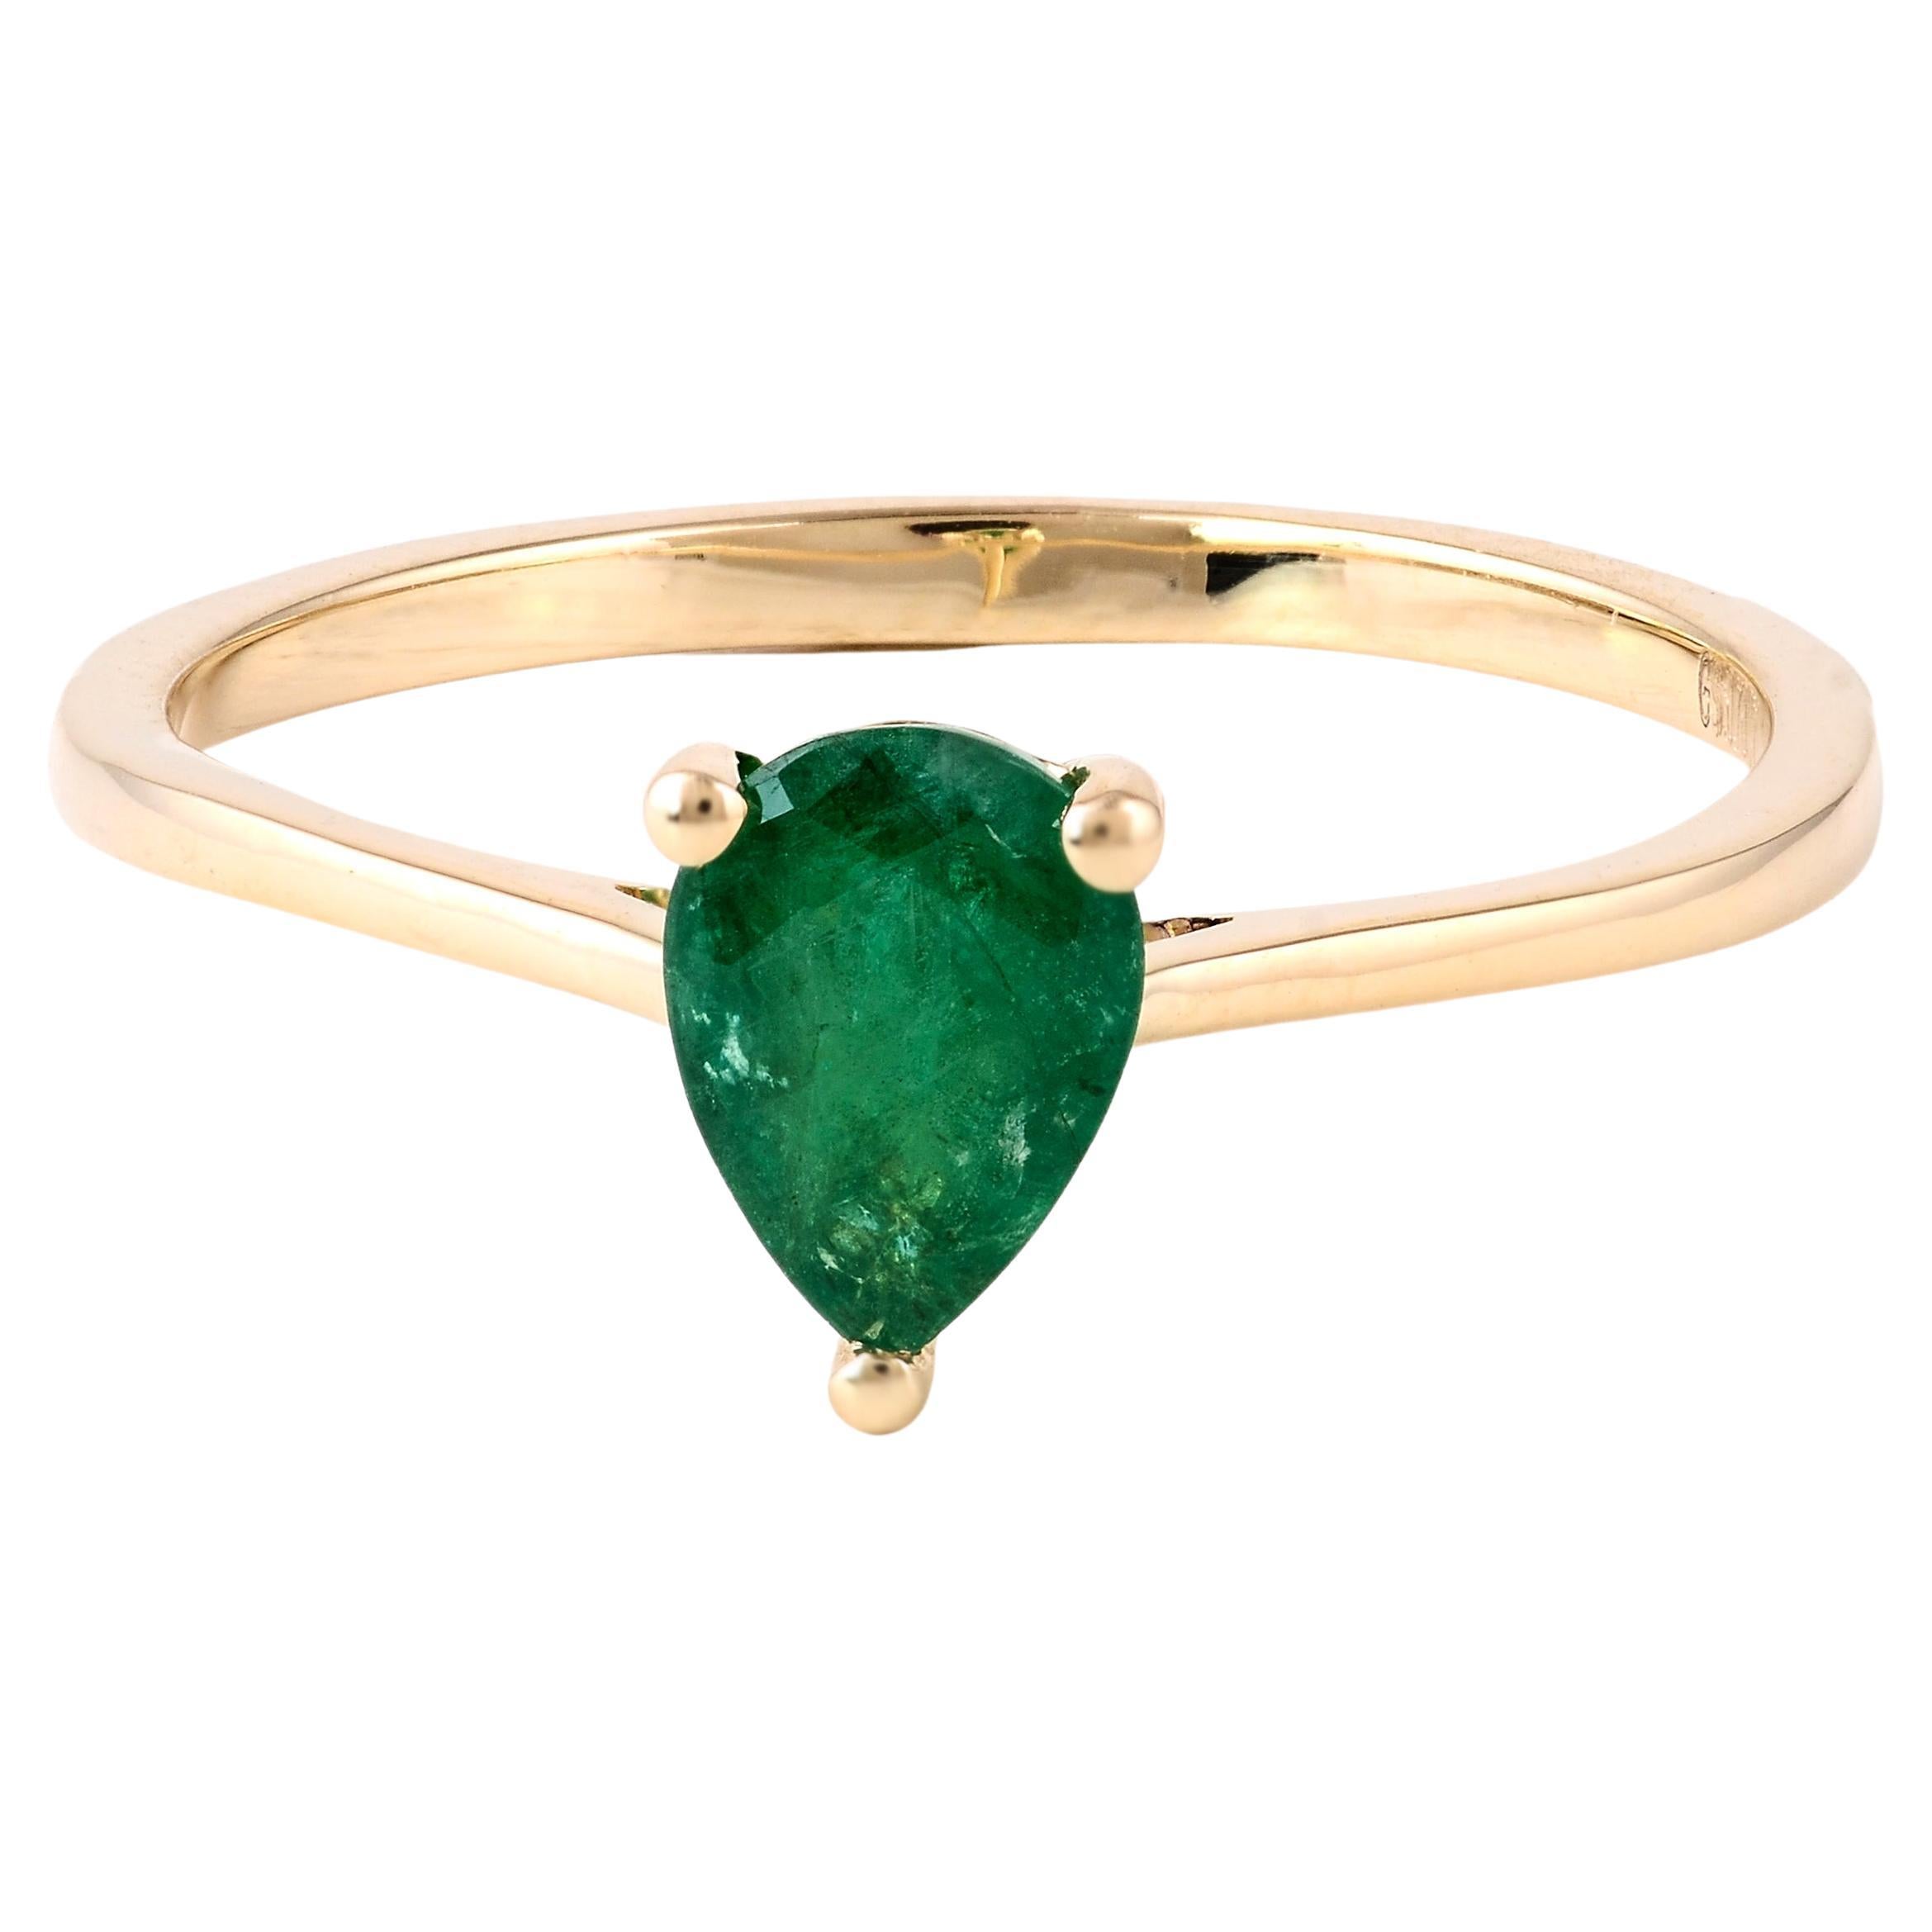 Luxurious 14K Emerald Cocktail Ring, Size 7 - Timeless & Elegant Statement Piece